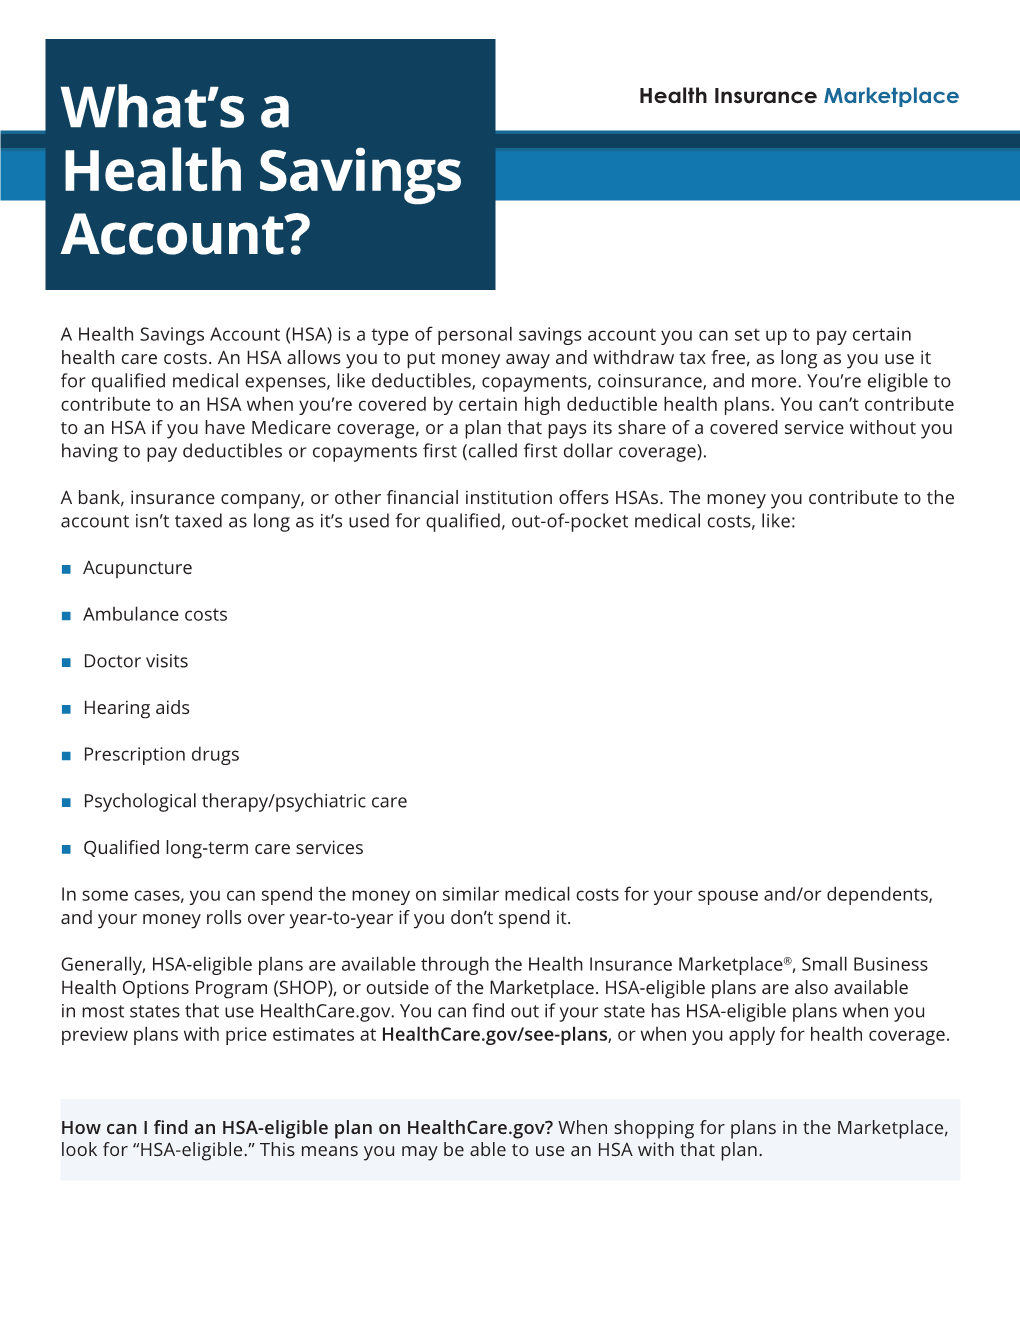 What's a Health Savings Account?